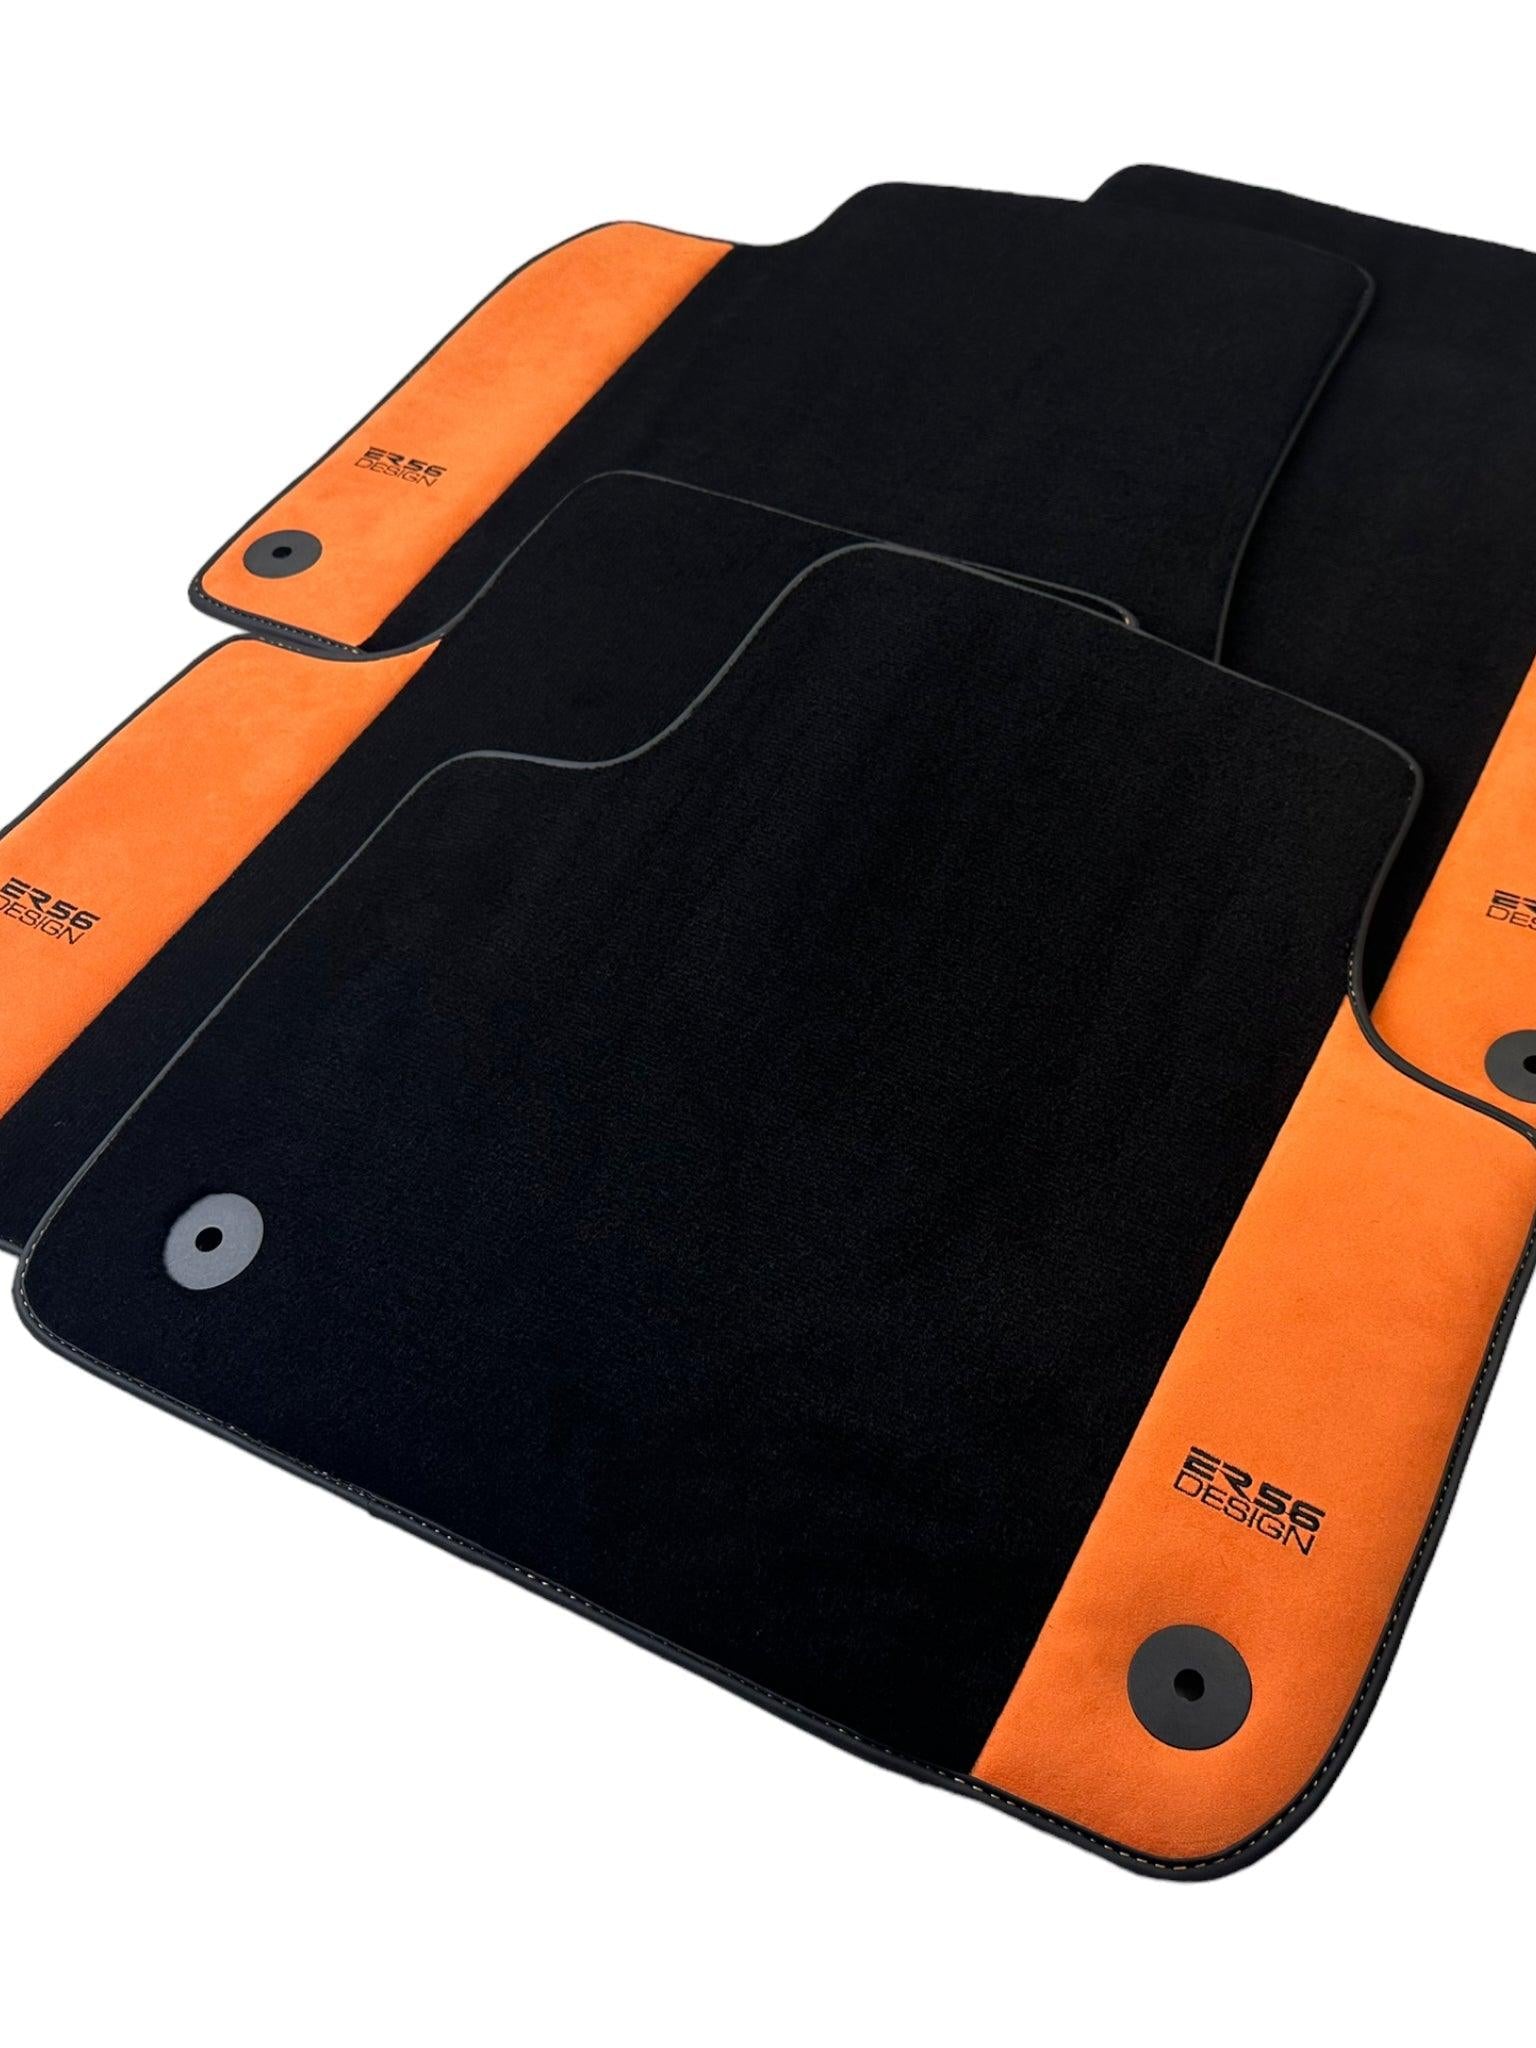 Black Floor Mats for Audi Q3 8U (2011-2018) Orange Alcantara | ER56 Design